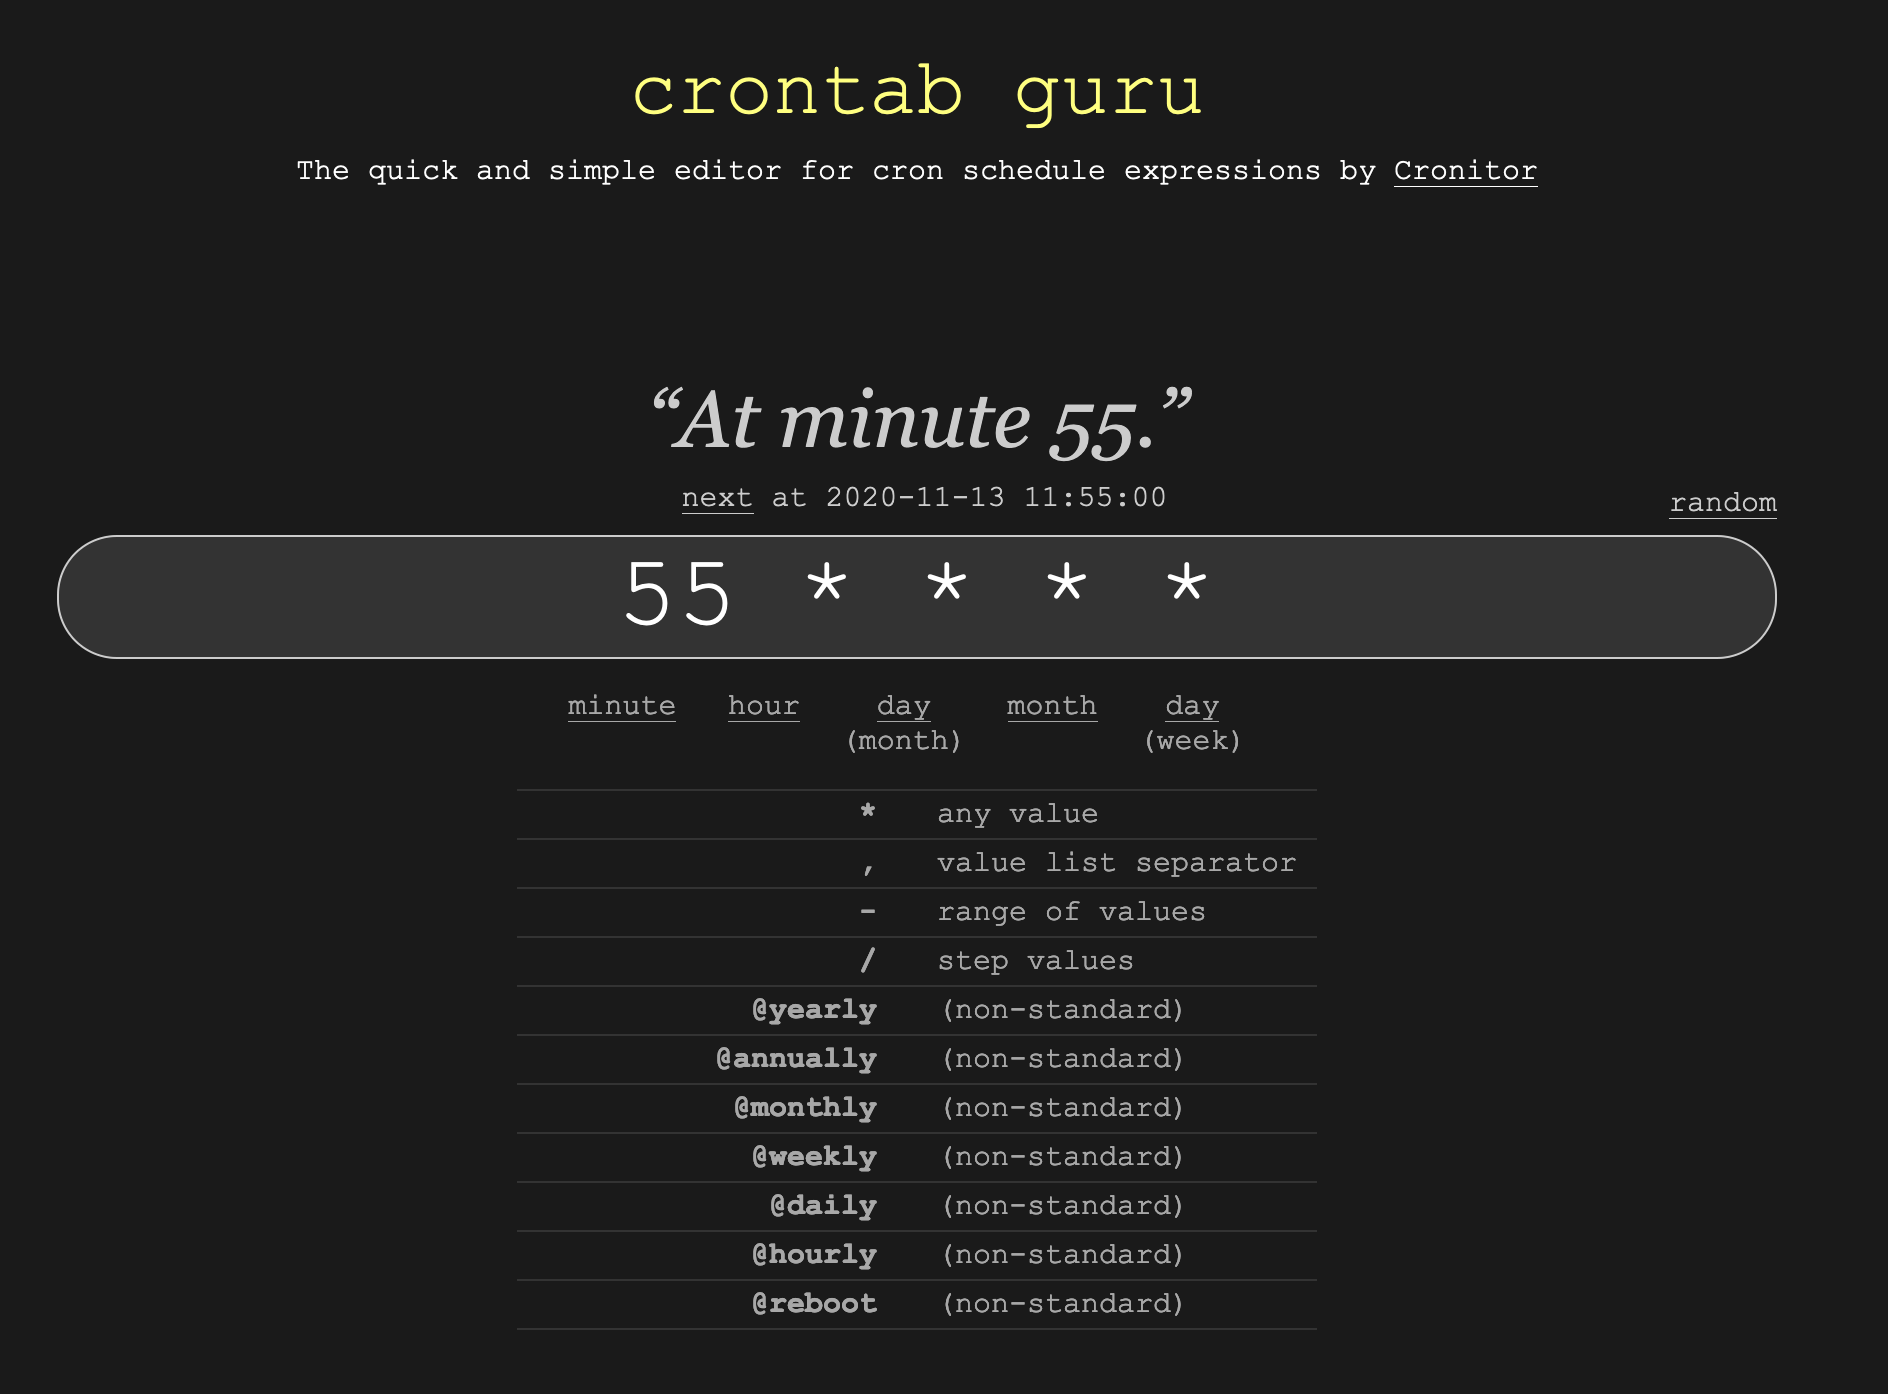 crontab.guru shows that  corresponds to “At minute 55.”